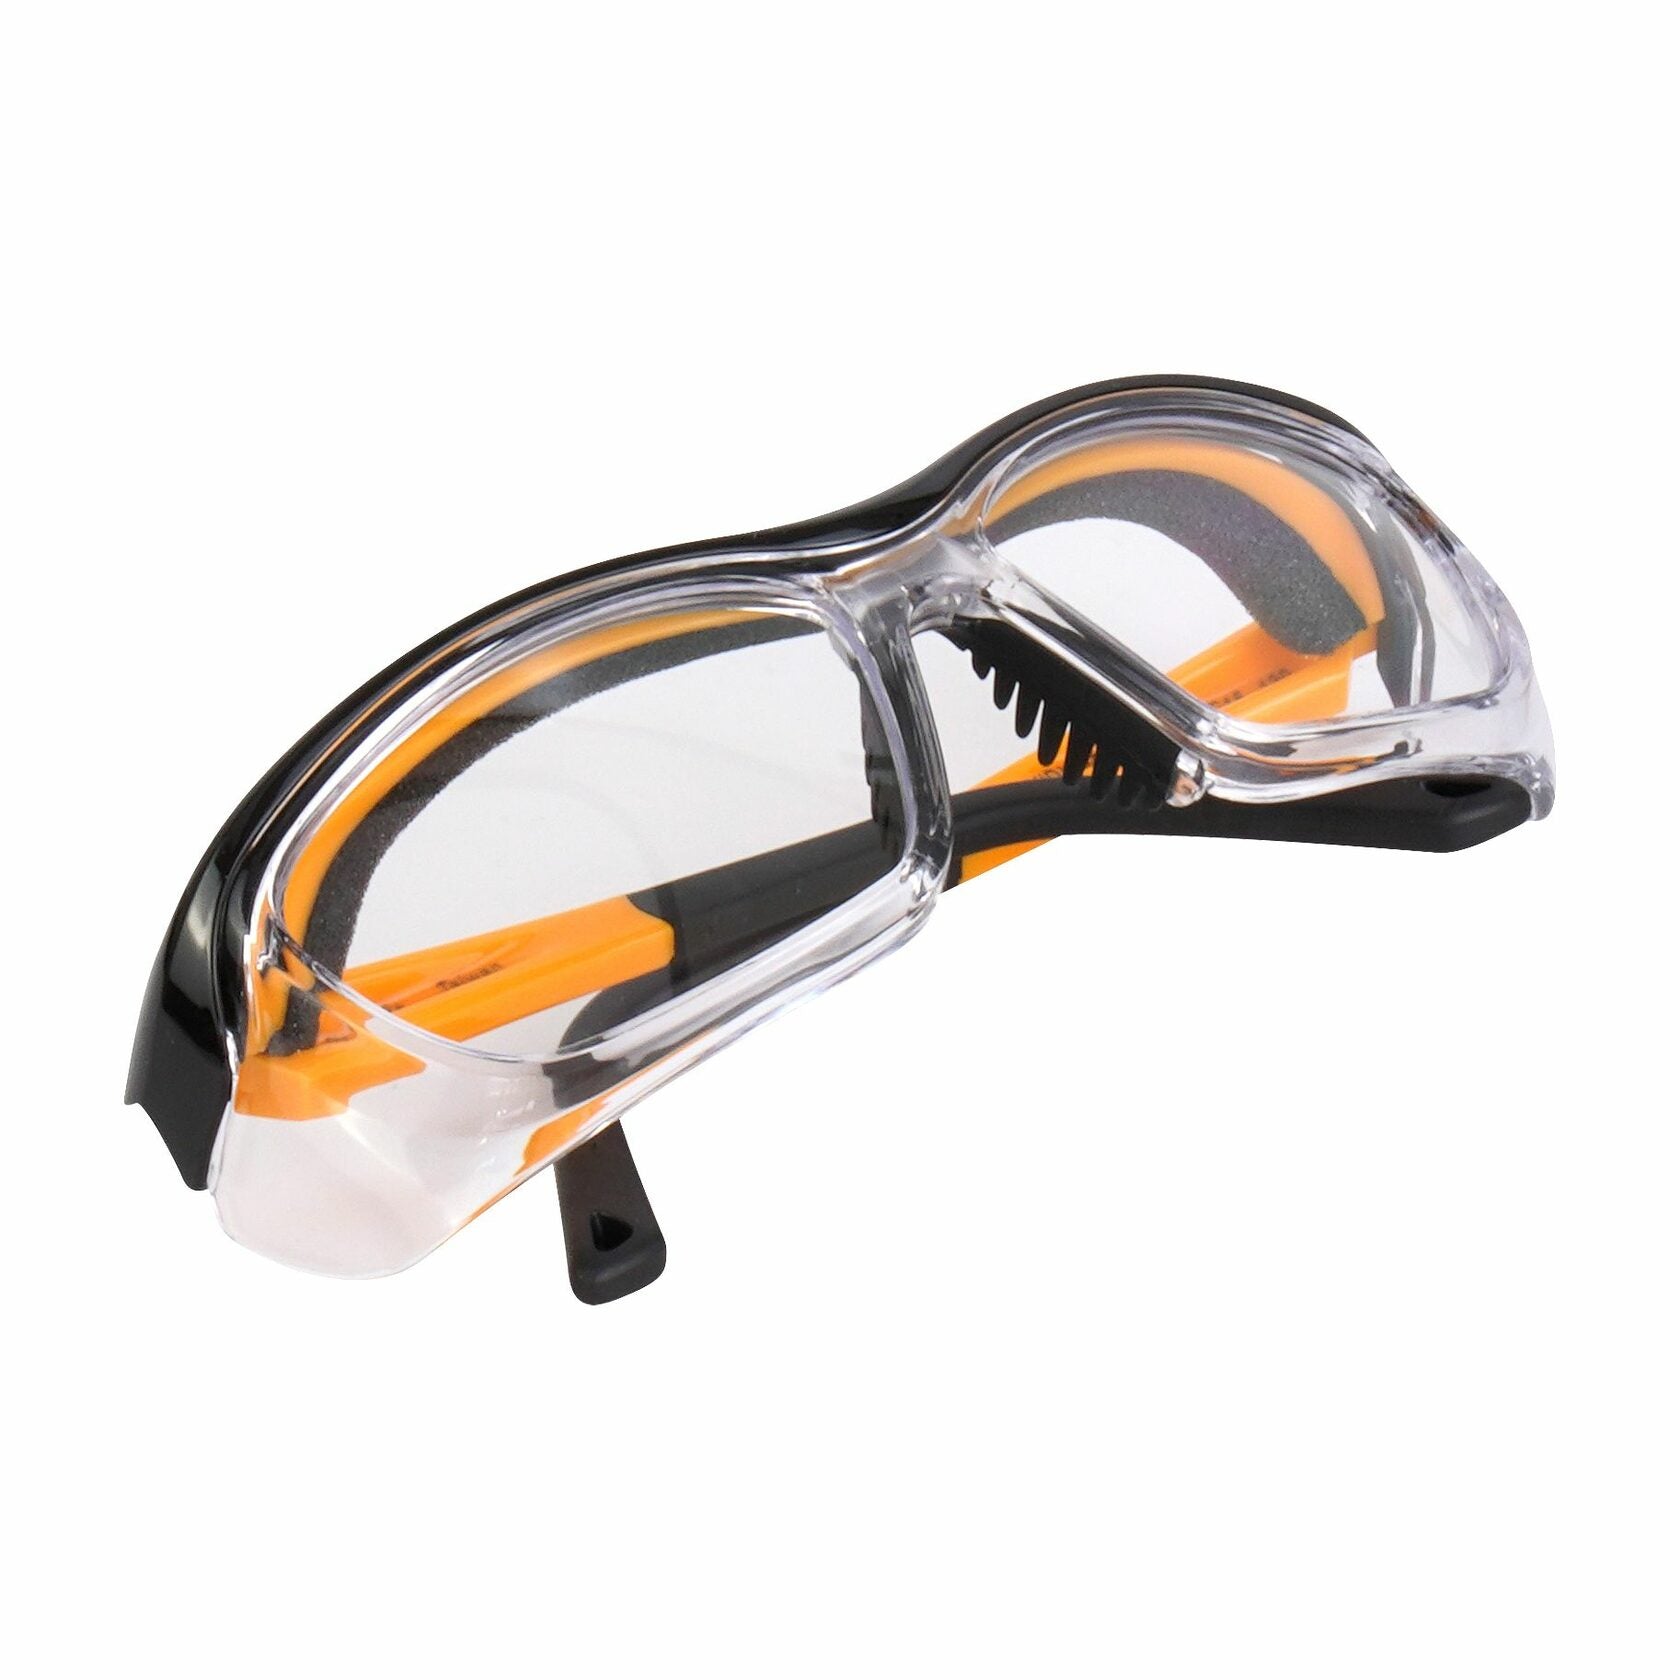 HiDX A006 Protective Eyewear - Gloss Black & Orange